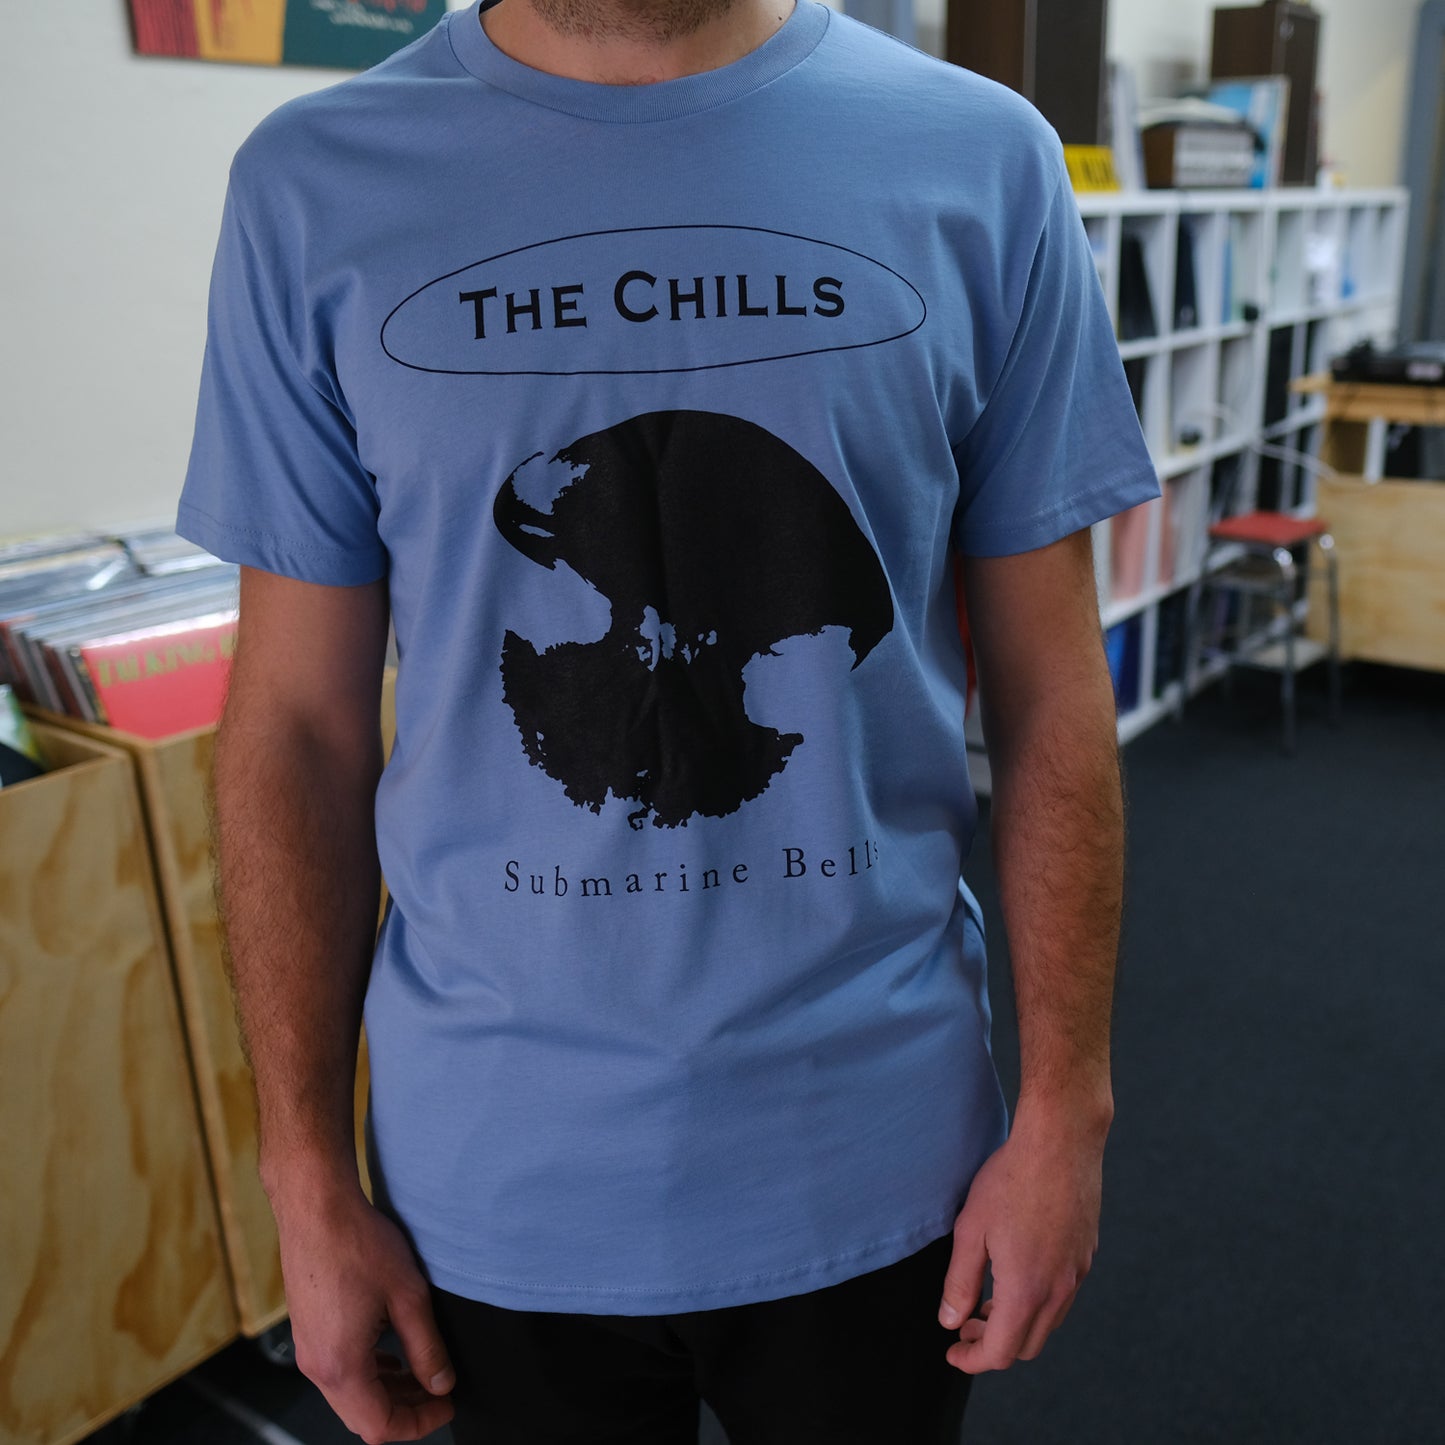 
                  
                    The Chills - Submarine Bells T Shirt (Carolina Blue)
                  
                